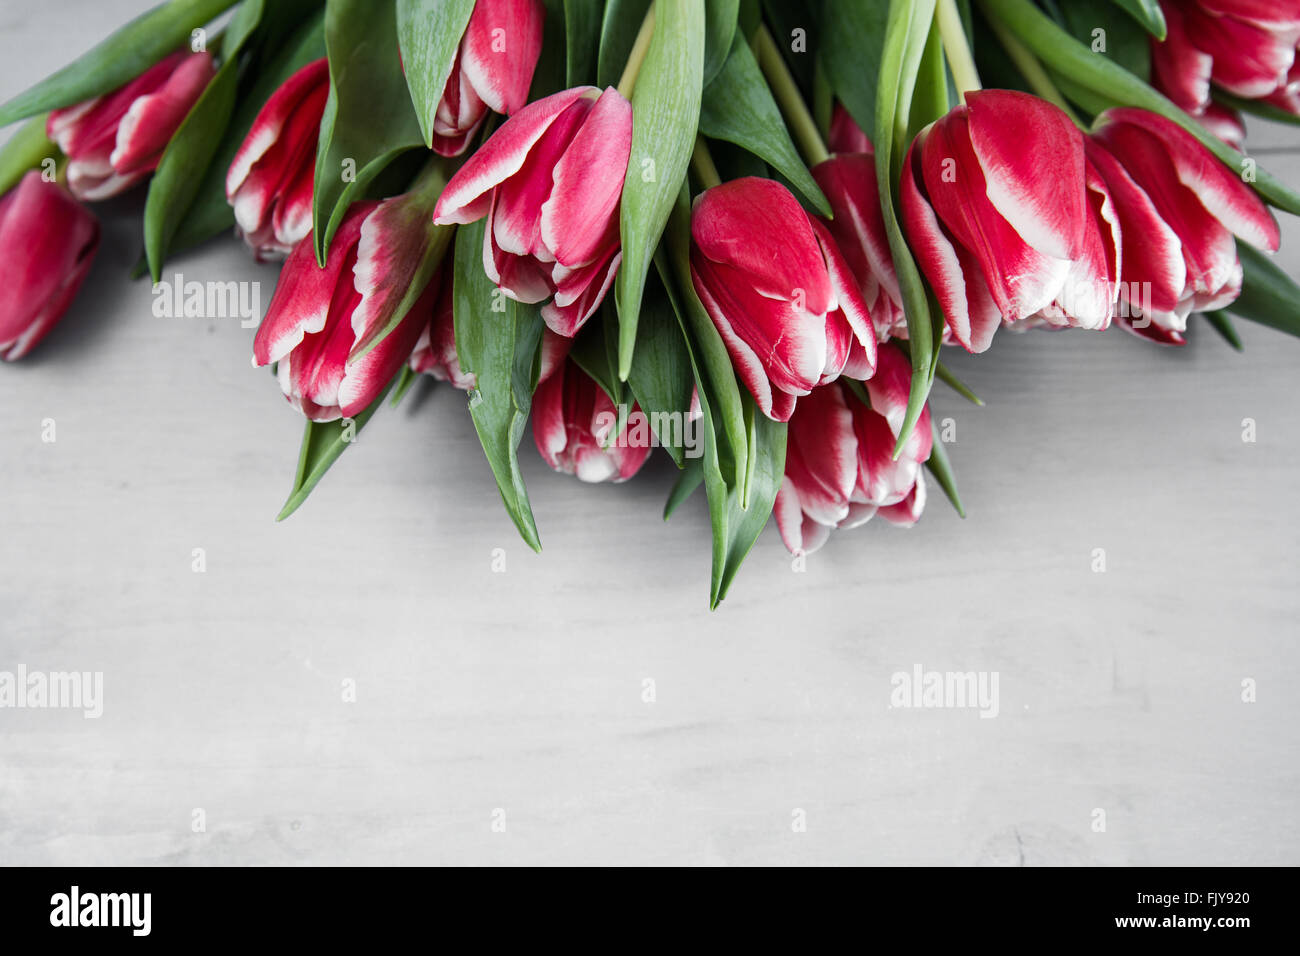 Rosa tulipanes en una mesa de madera Foto de stock